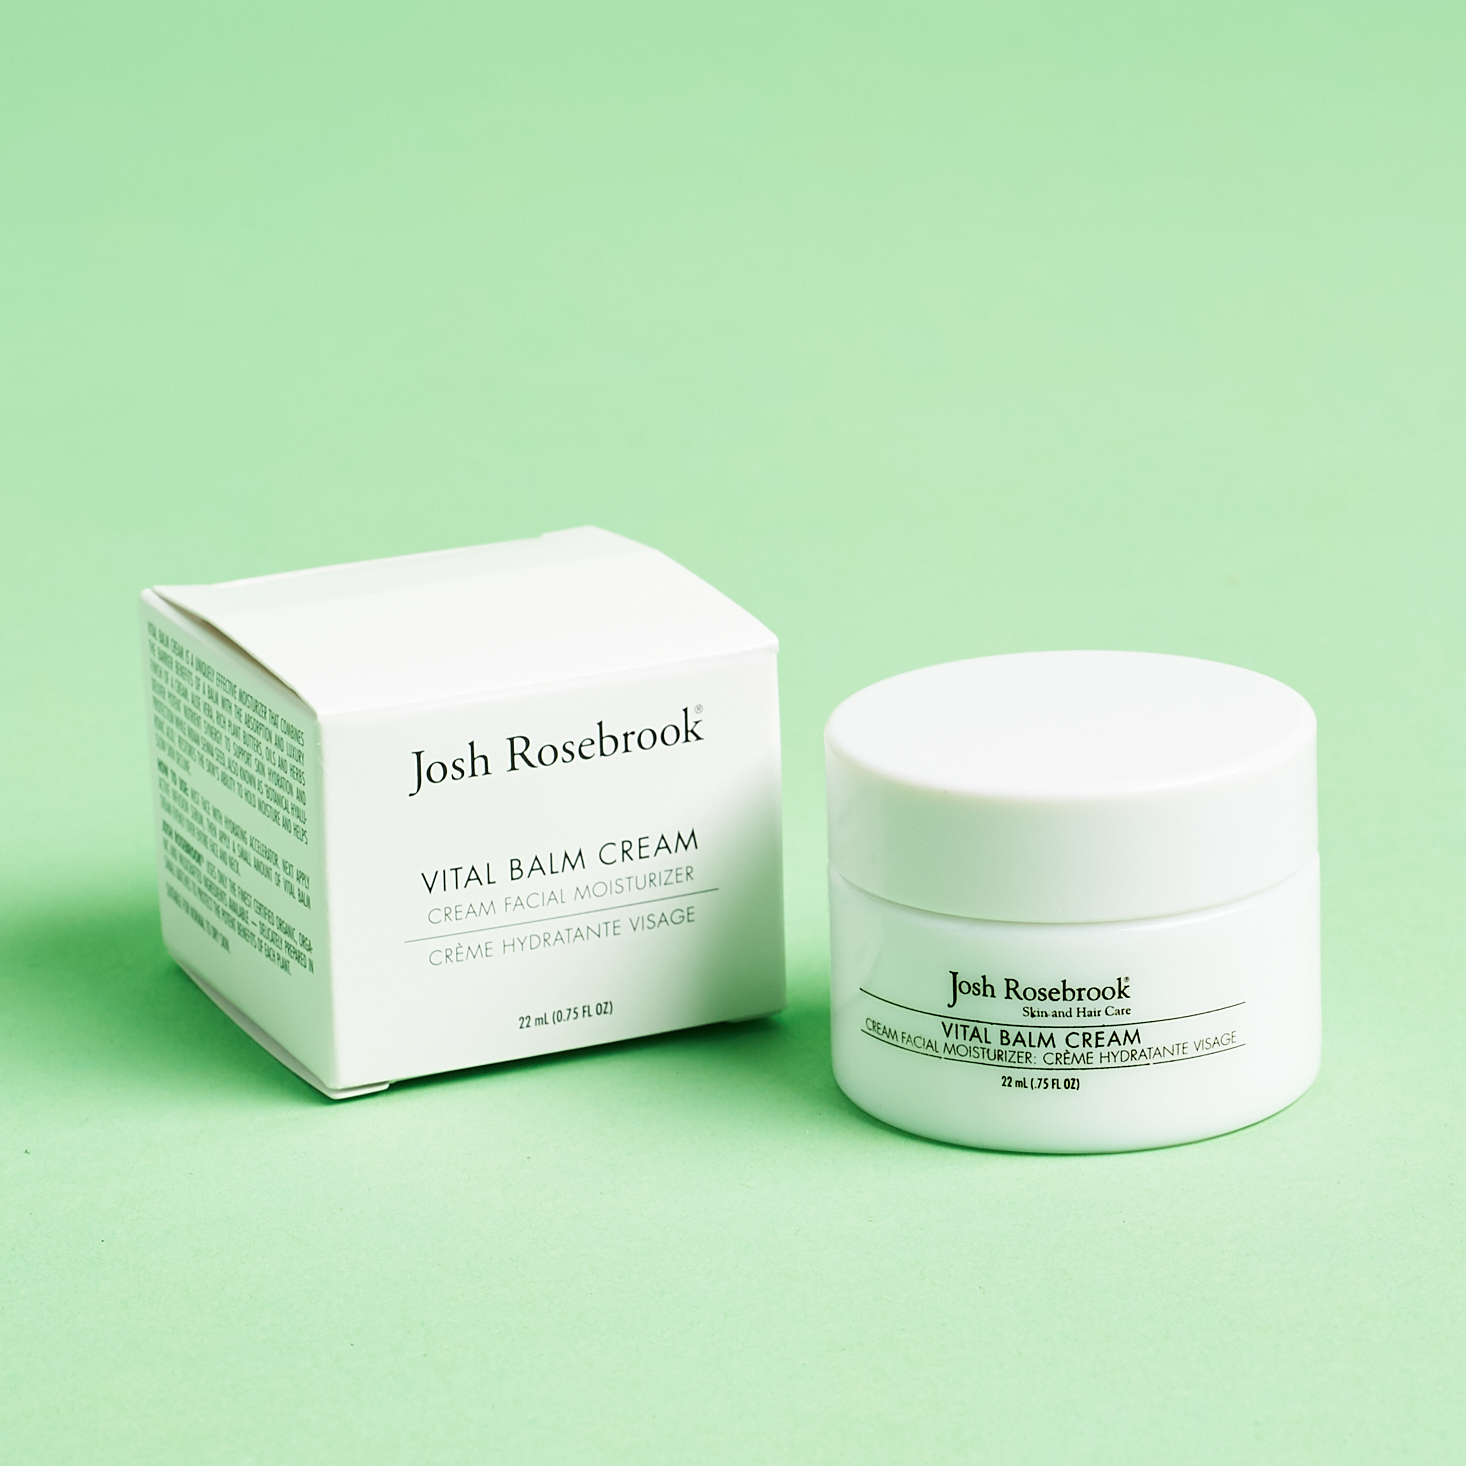 Josh Rosebrook Vital Balm Cream with box